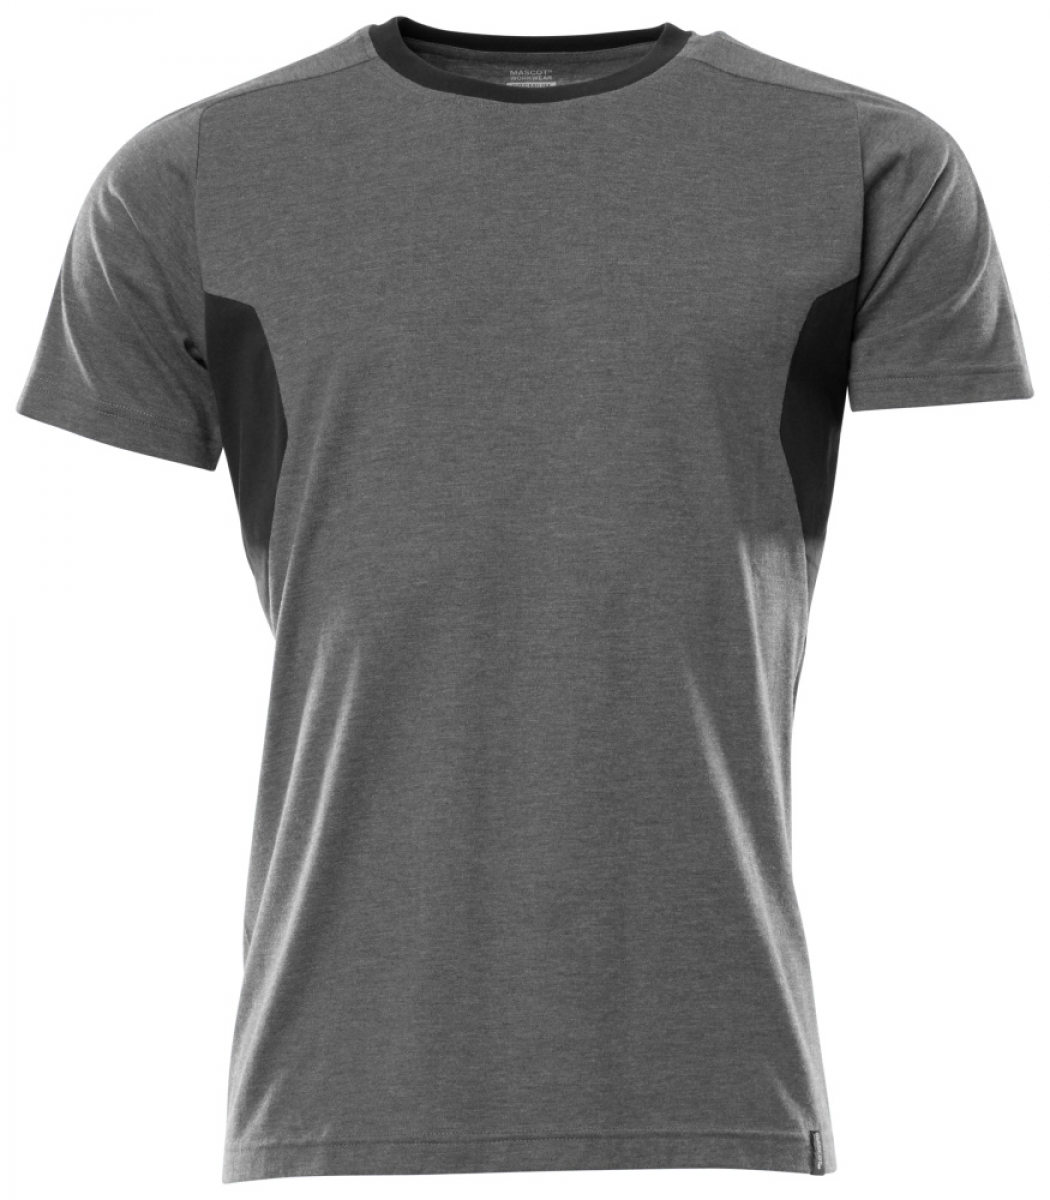 MASCOT-Worker-Shirts, Damen-T-Shirt, 195 g/m, dunkelanthrazit/schwarz